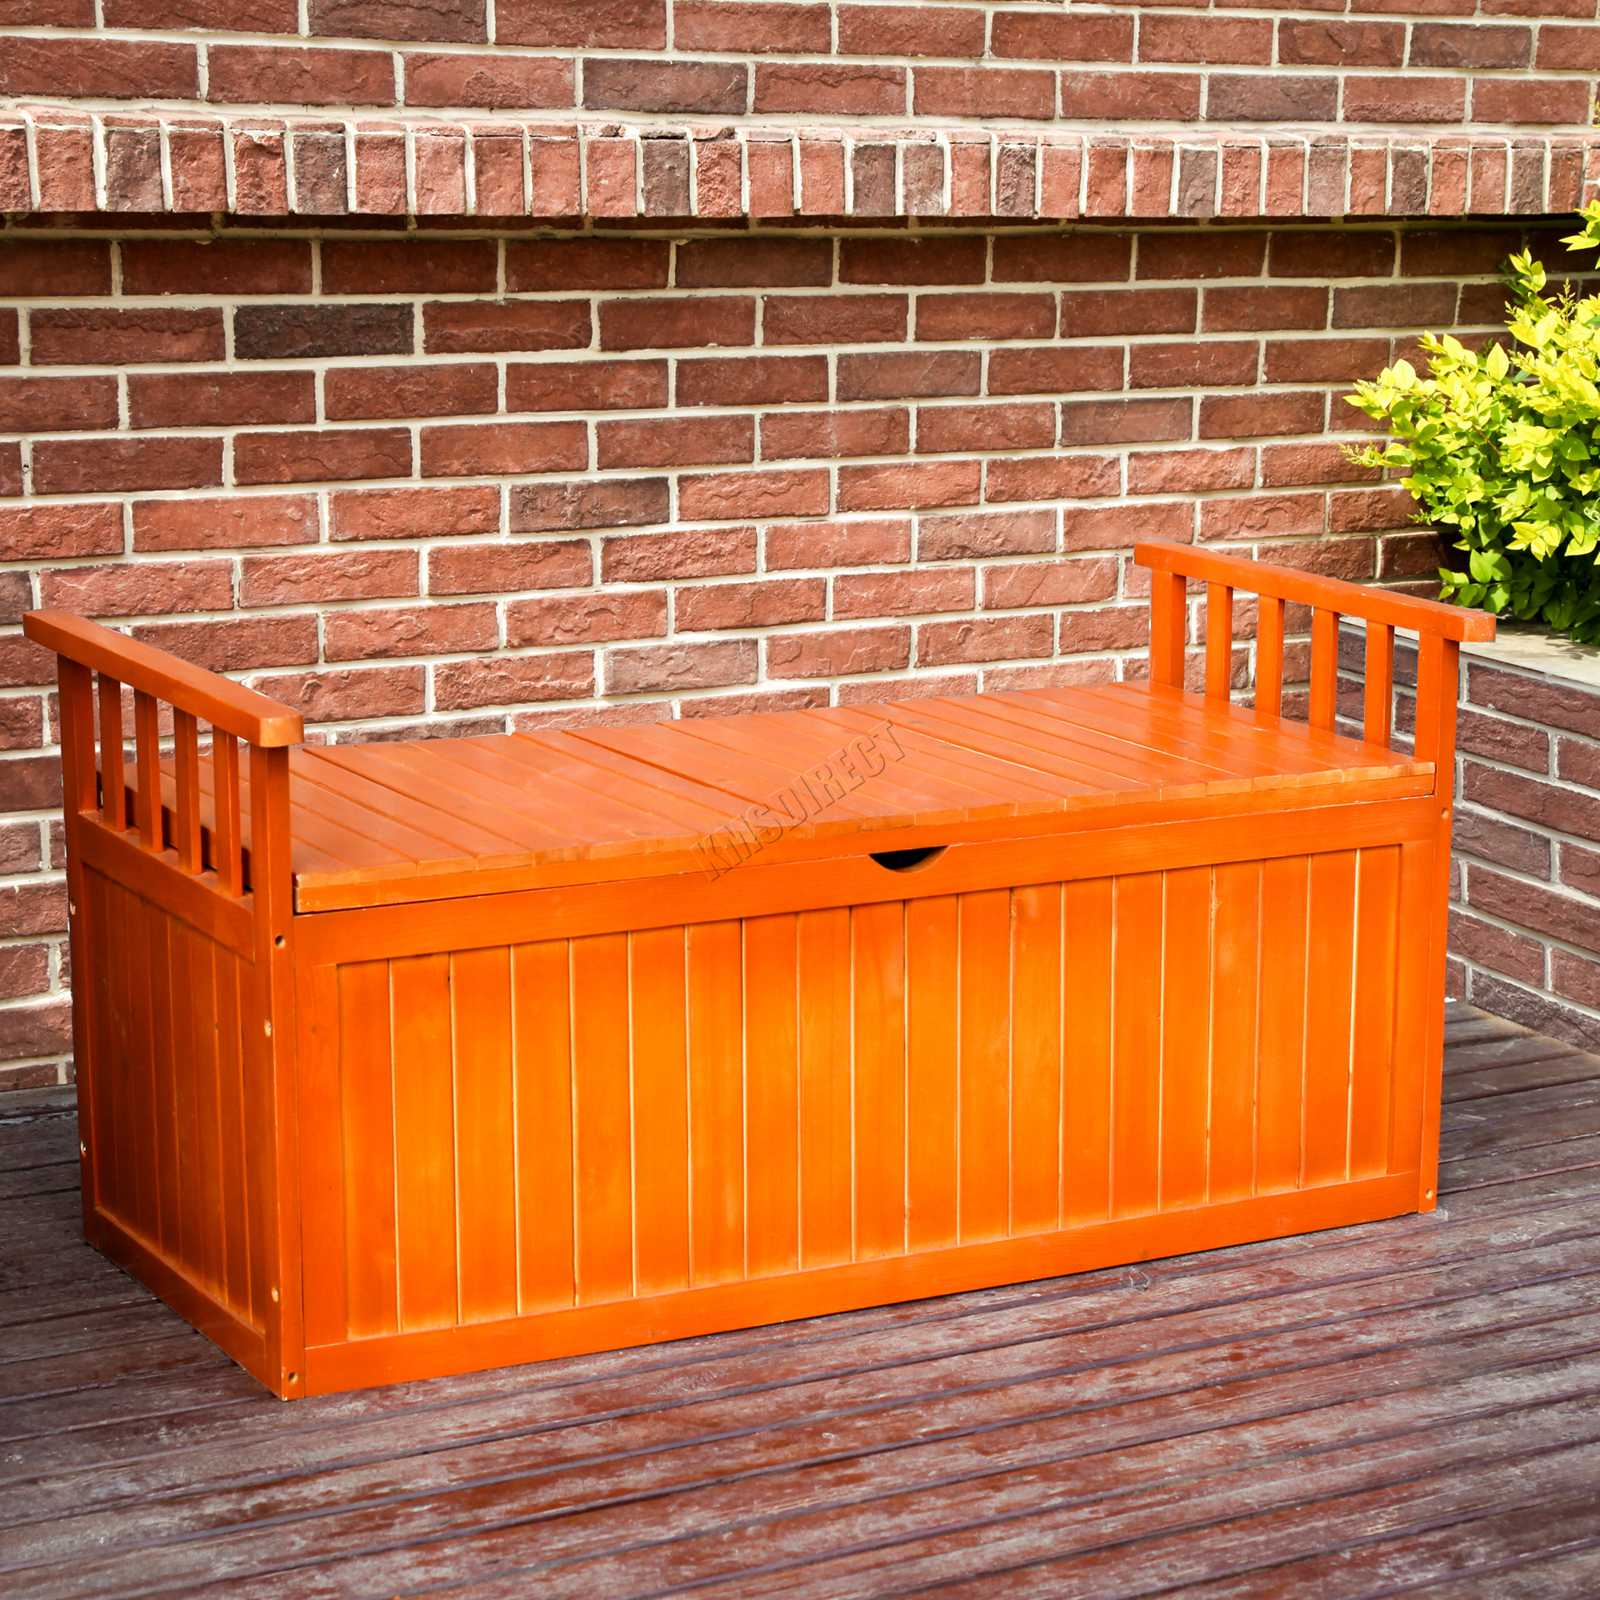 BIRCHTREE Wooden Garden Bench 2 Seater Storage Box with Lid Outdoor Patio Deck